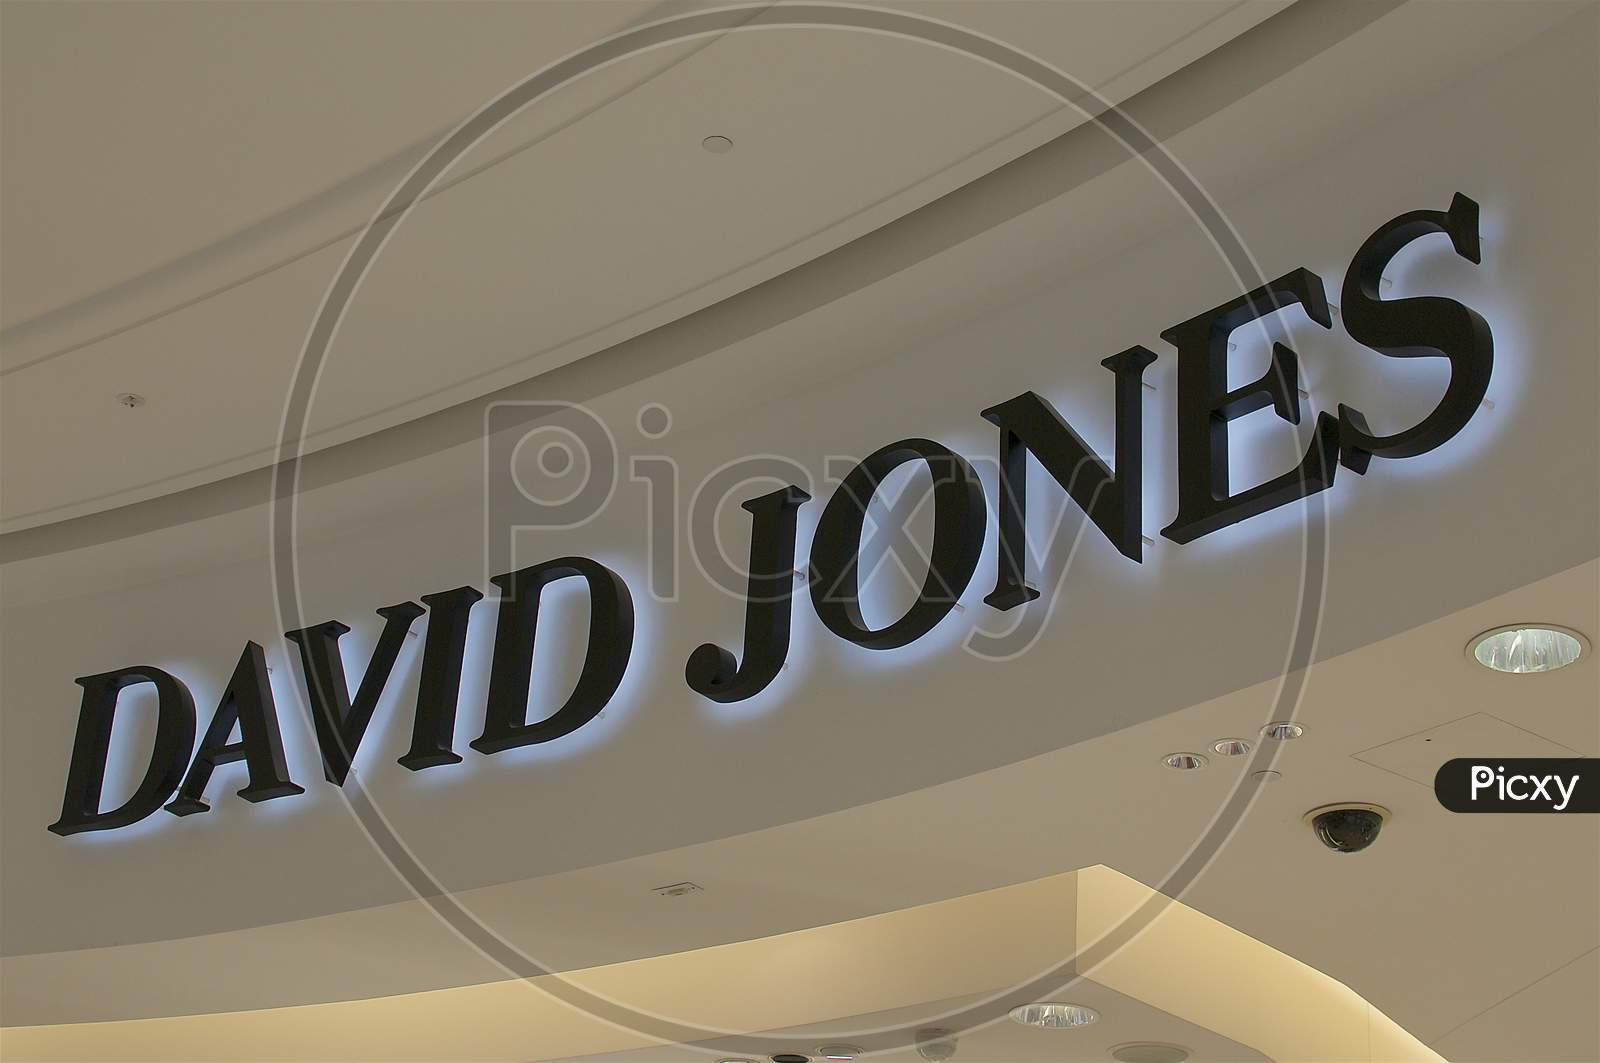 David Jones Logo Hanging In Brisbane